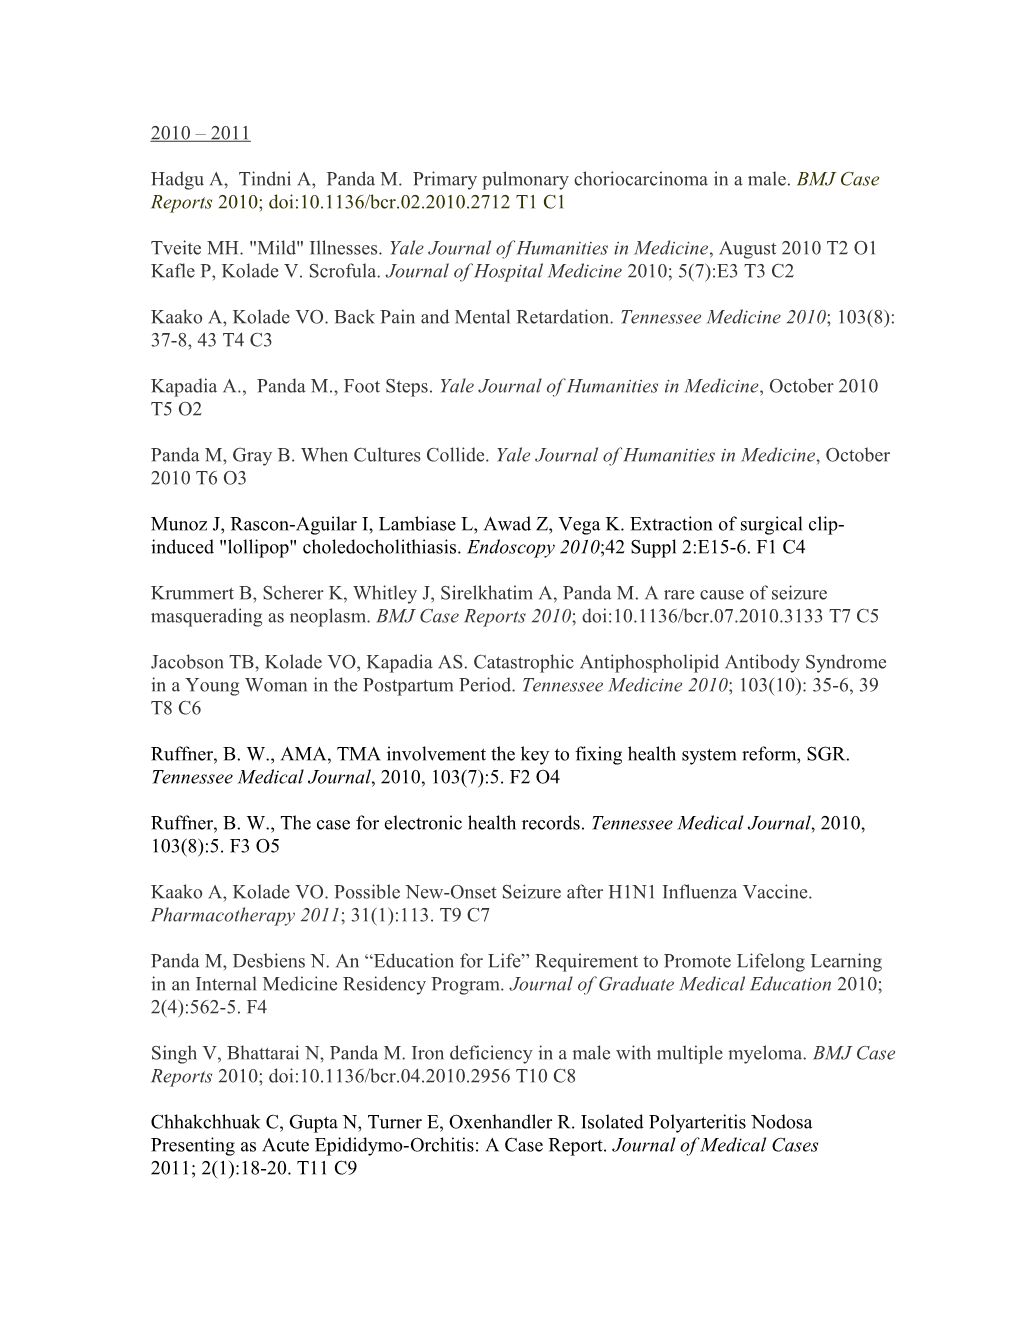 Hadgu A, Tindni A, Panda M. Primary Pulmonary Choriocarcinoma in a Male.BMJ Case Reports2010;